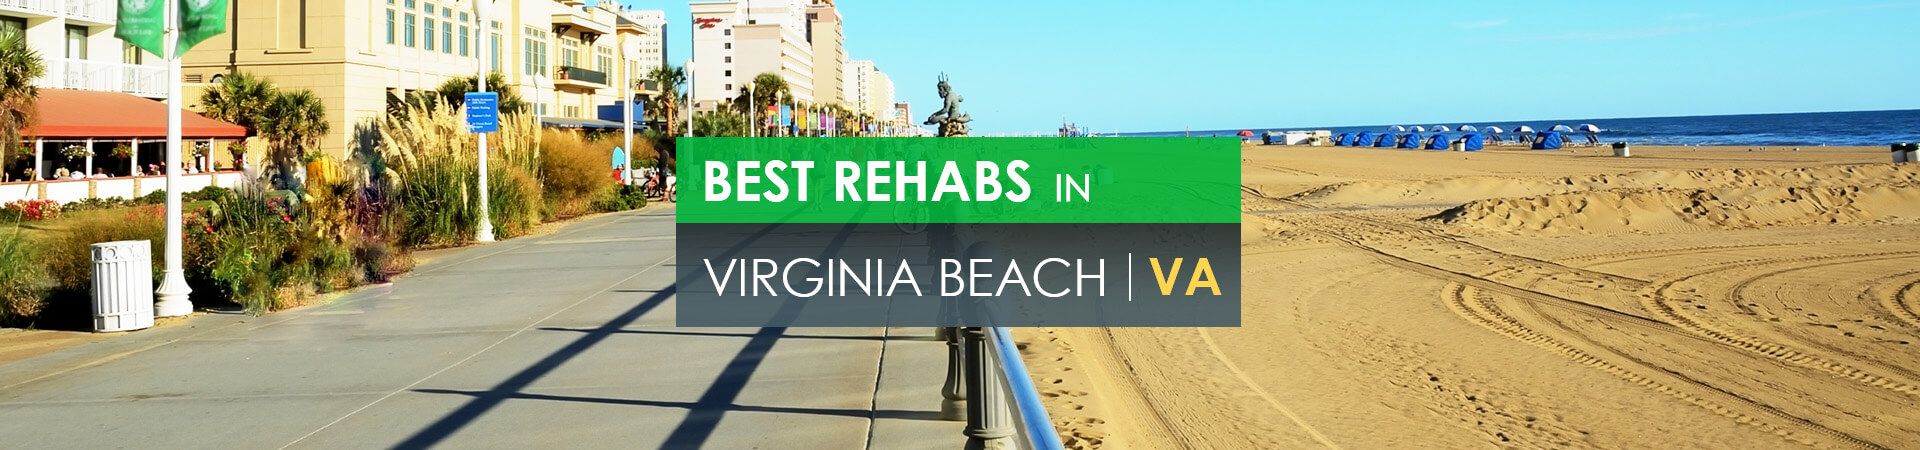 Best rehabs in Virginia Beach, VA